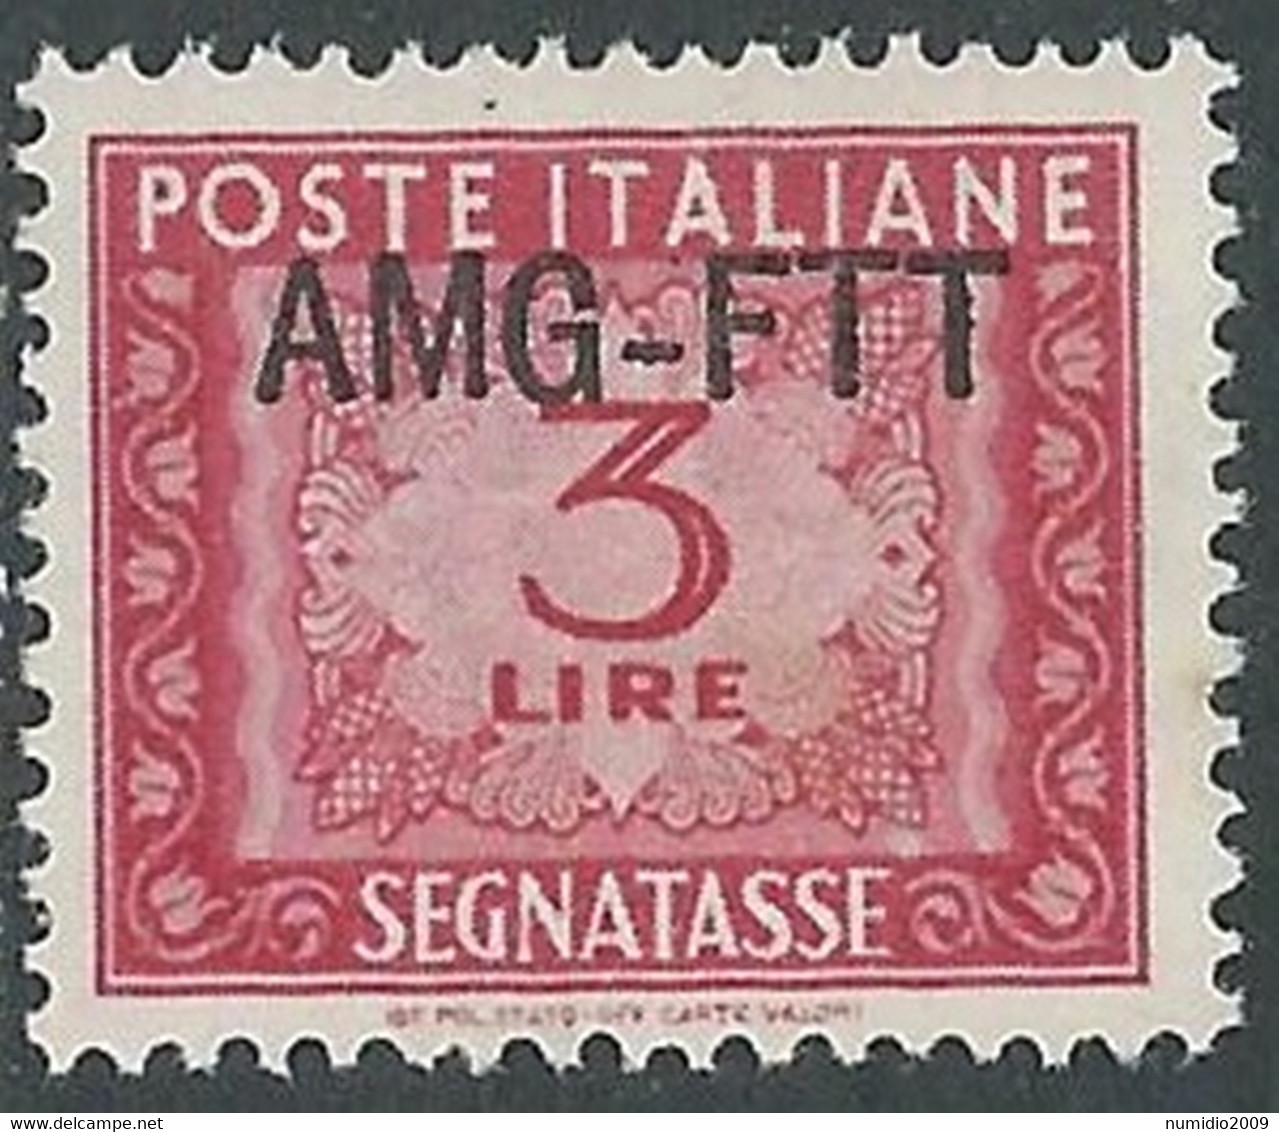 1949-54 TRIESTE A SEGNATASSE 3 LIRE MNH ** - RE10-7 - Segnatasse